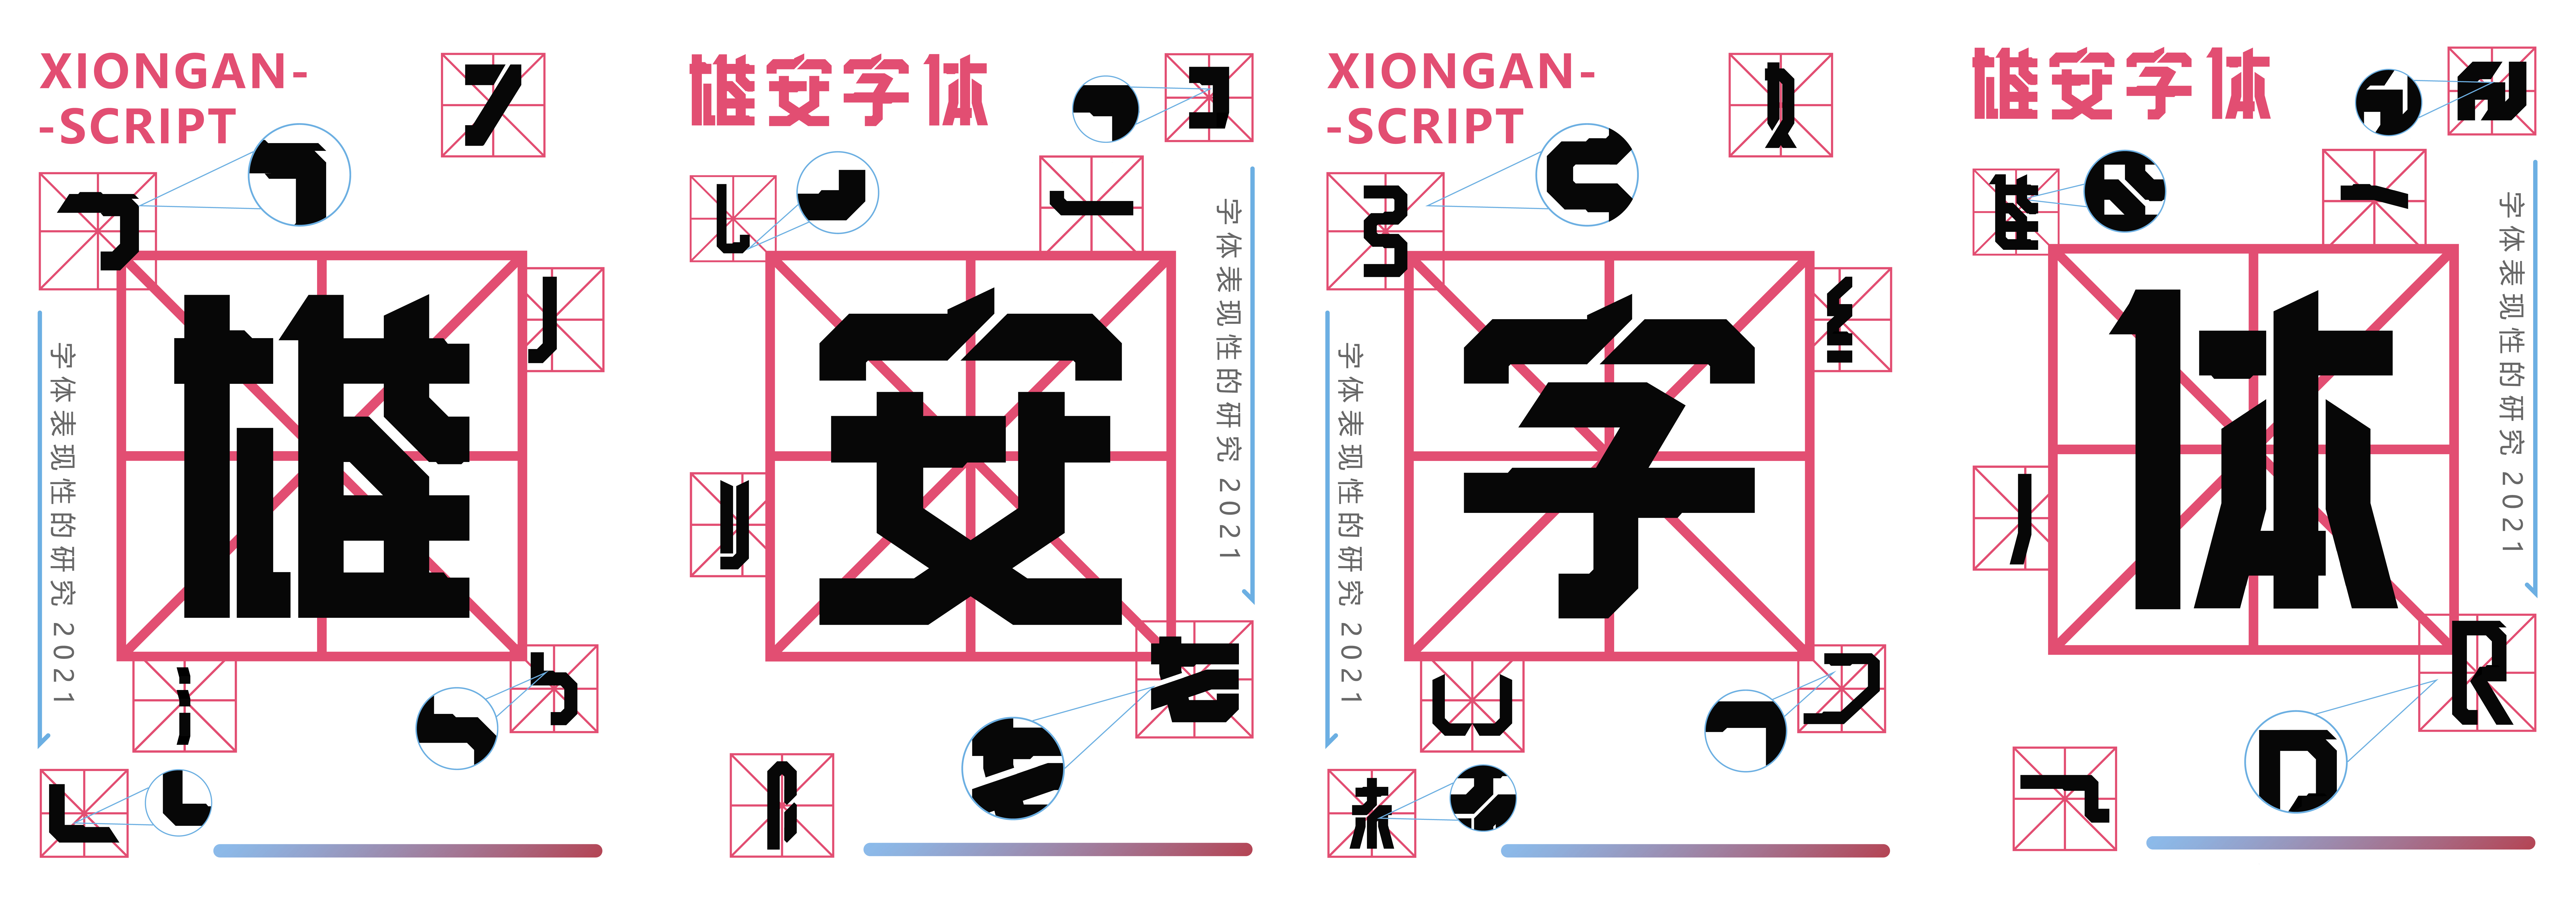 Xiongan's fifth anniversary dictionary